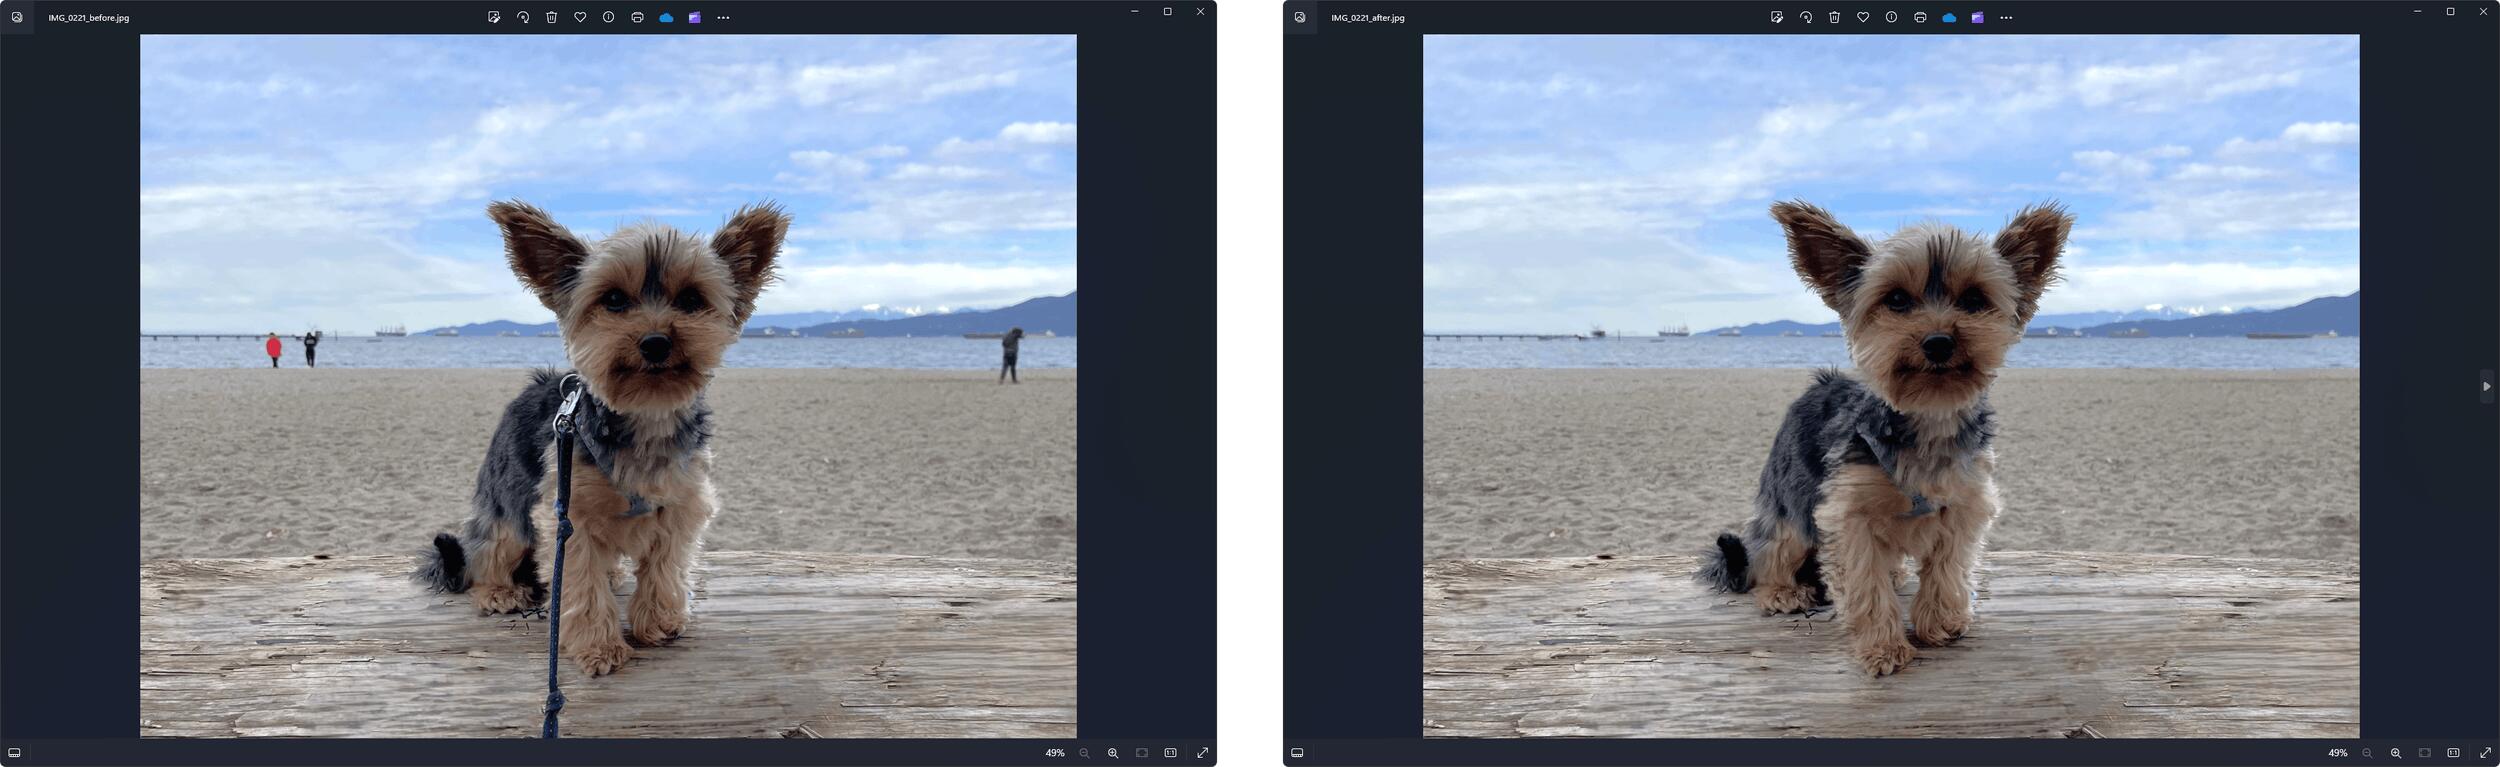 Windows Photos App Generative Erase